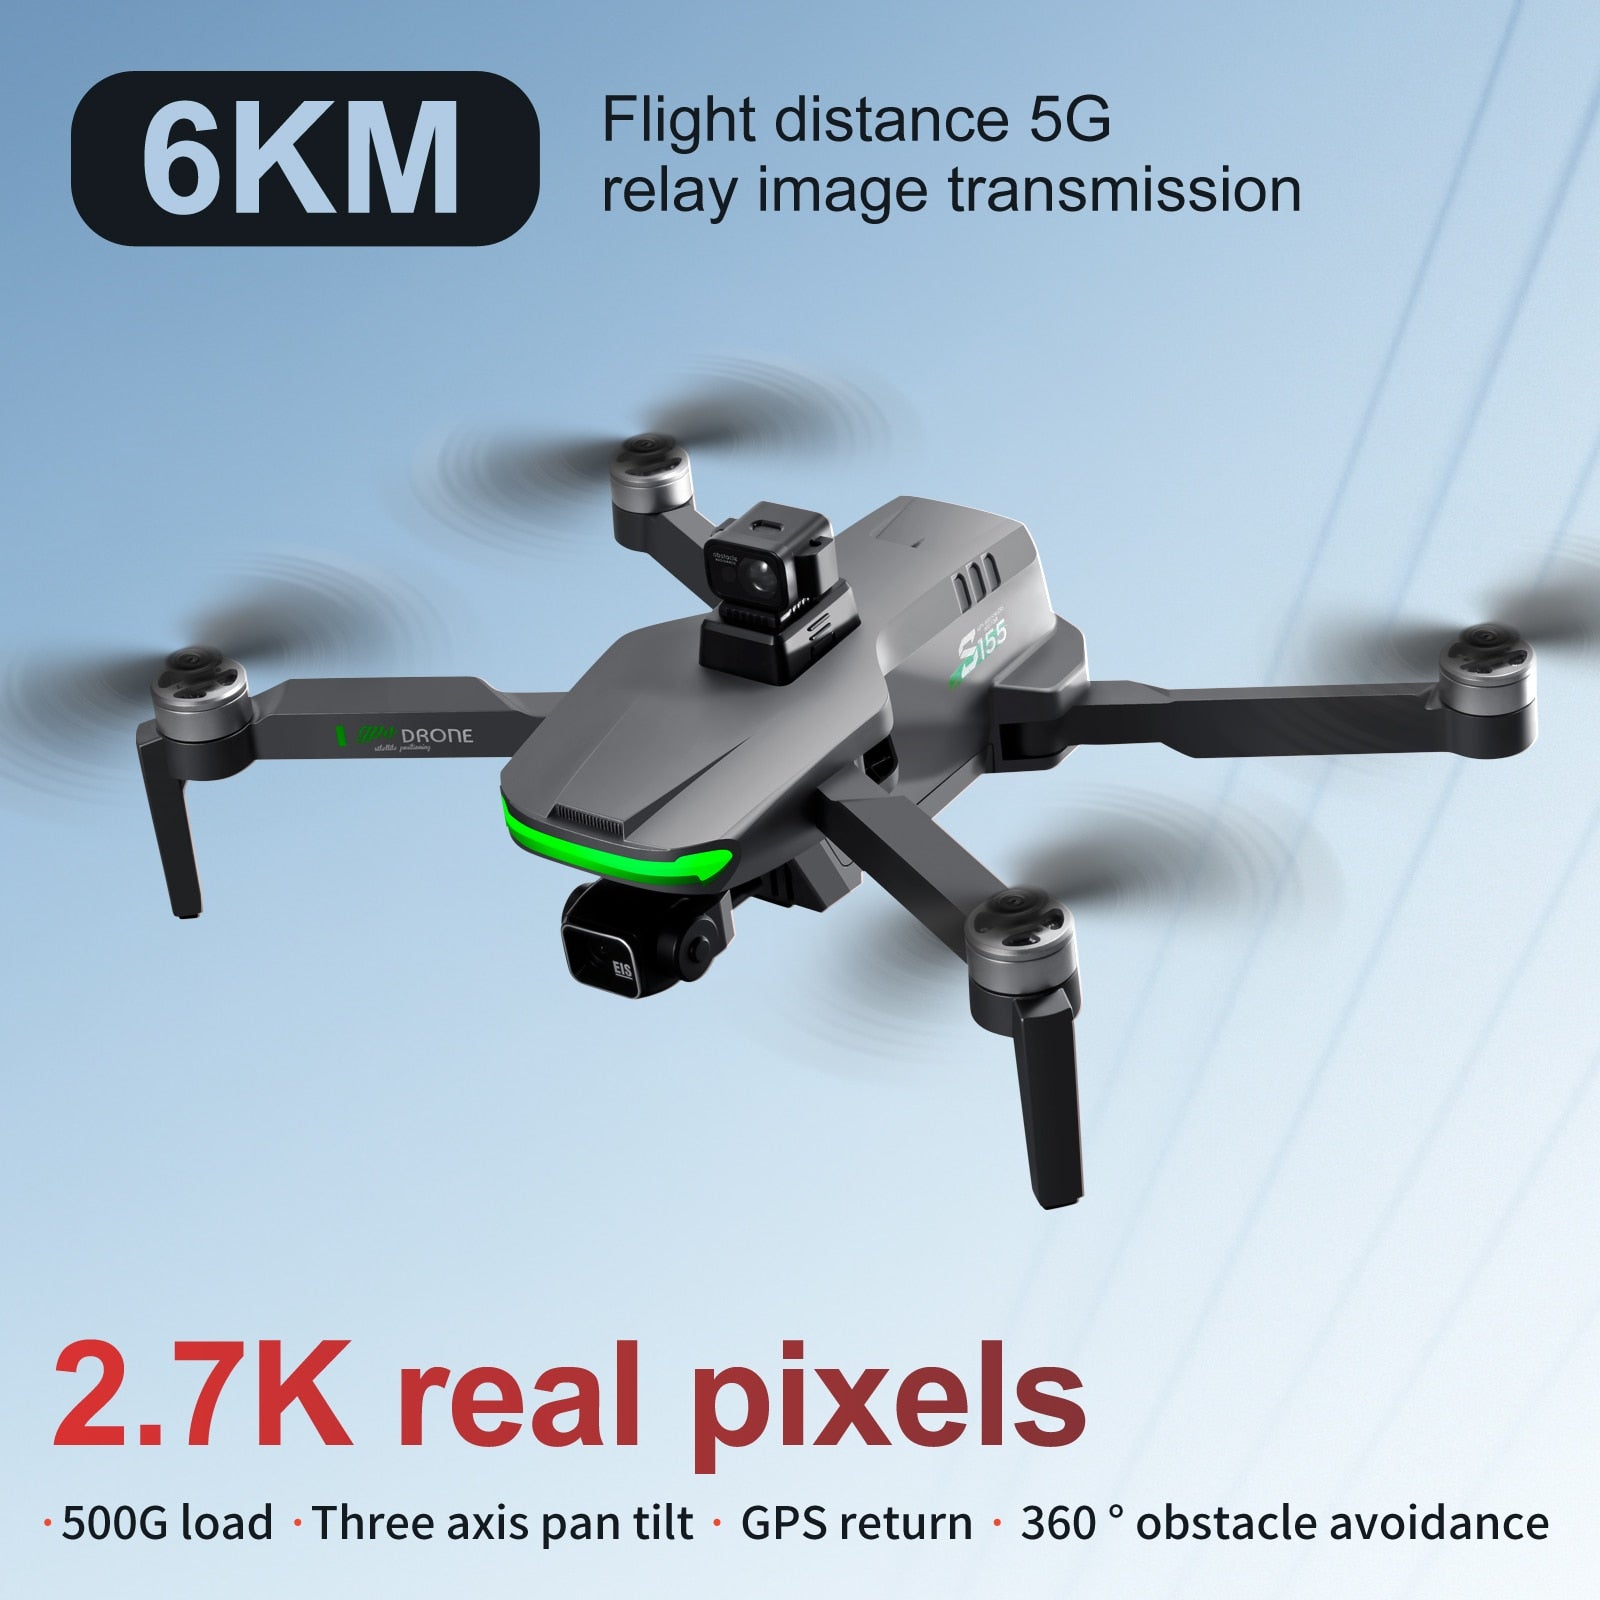 S155 Pro GPS Drone, Flight distance 5G 6KM relay image transmission DRONE 2.7